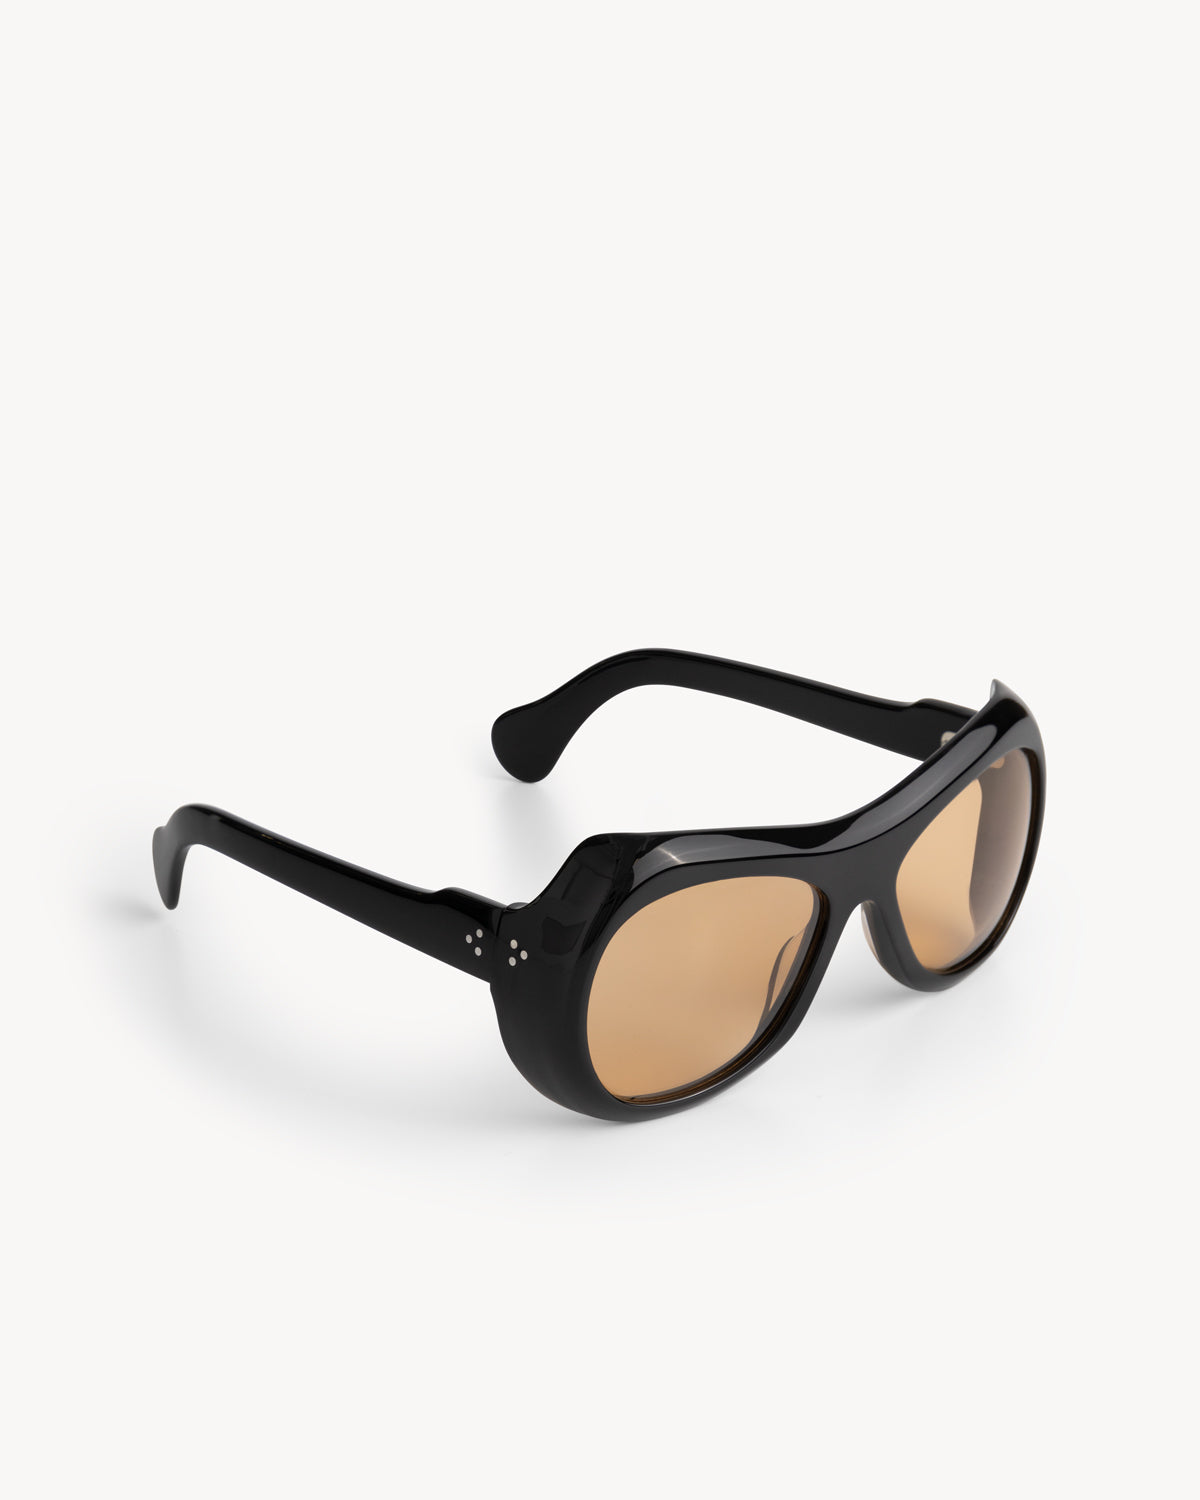 Port Tanger Soledad Sunglasses in Black Acetate and Amber Lenses 2